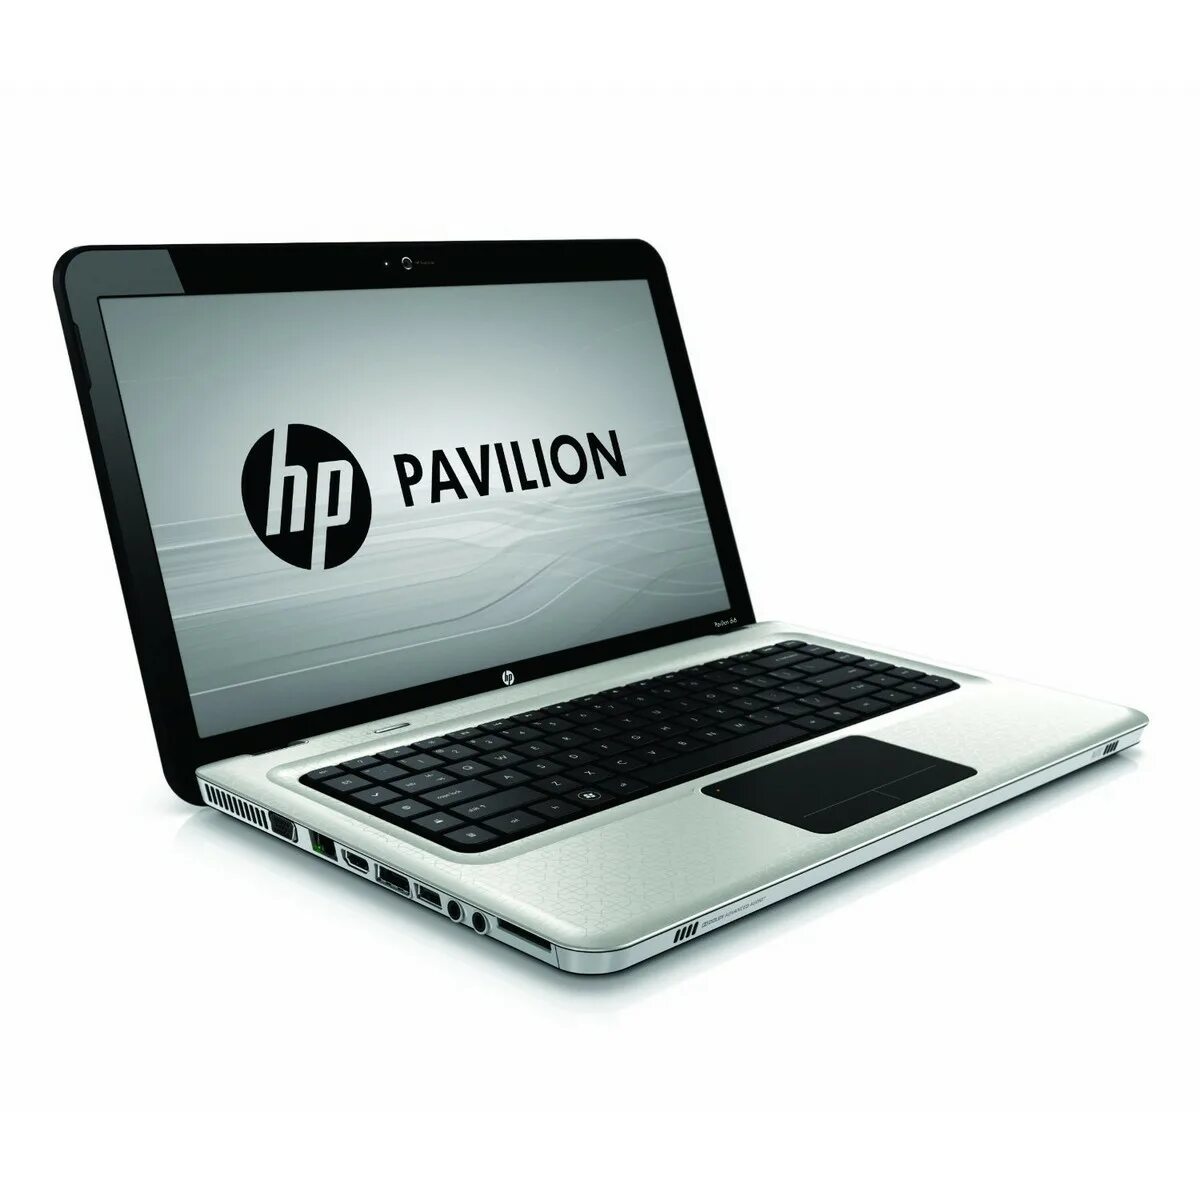 Ноутбук pavilion. Ноутбук HP Pavilion dv6. Ноутбук HP Pavilion dv6-3070er. Ноутбук HP Pavilion dv6 3000. Модель HP Pavilion dv6 Notebook.